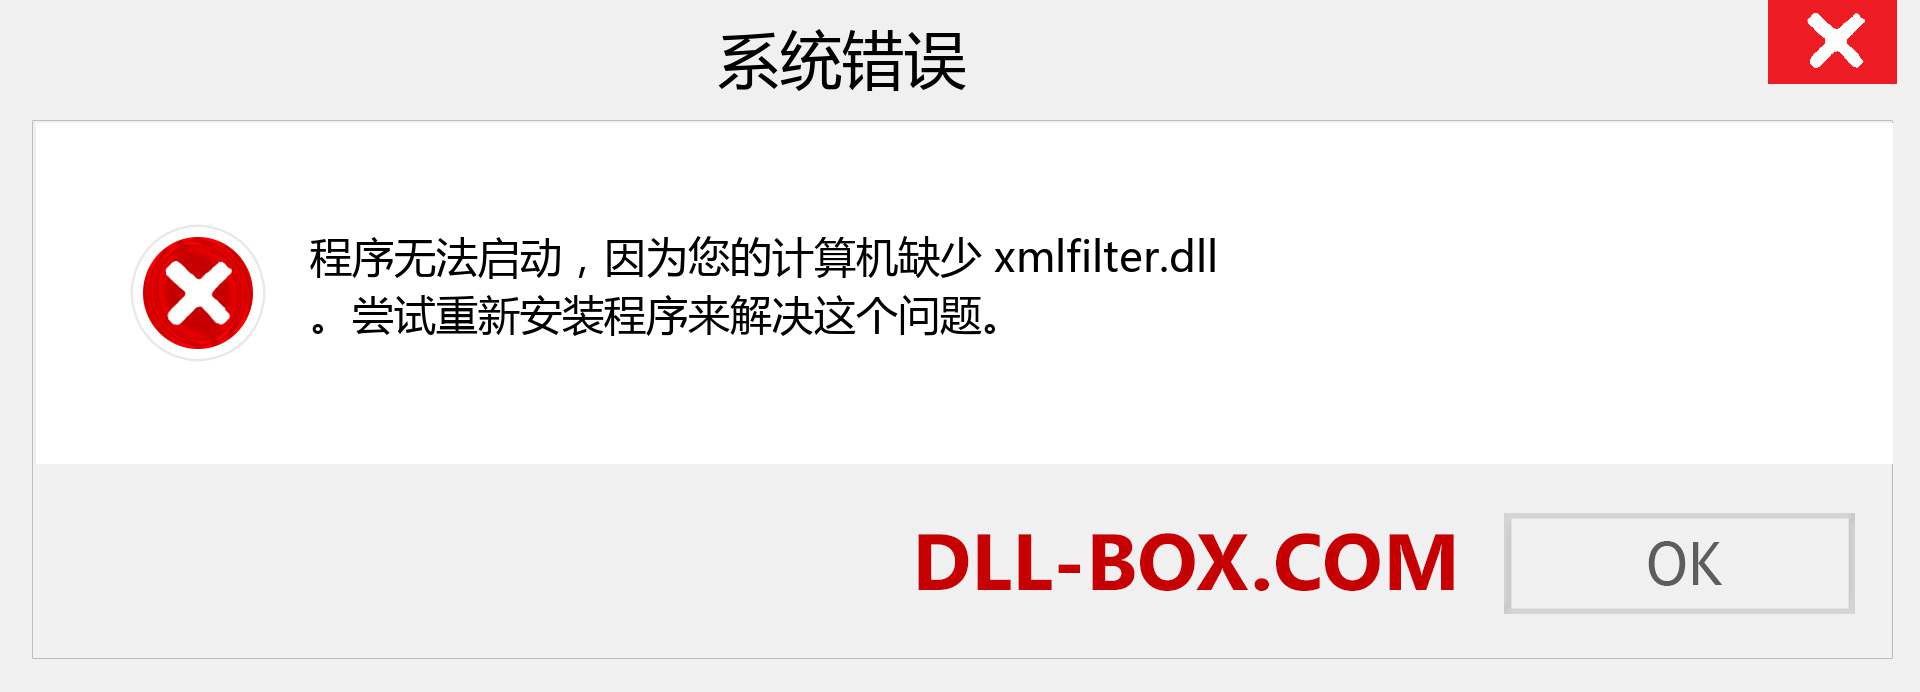 xmlfilter.dll 文件丢失？。 适用于 Windows 7、8、10 的下载 - 修复 Windows、照片、图像上的 xmlfilter dll 丢失错误